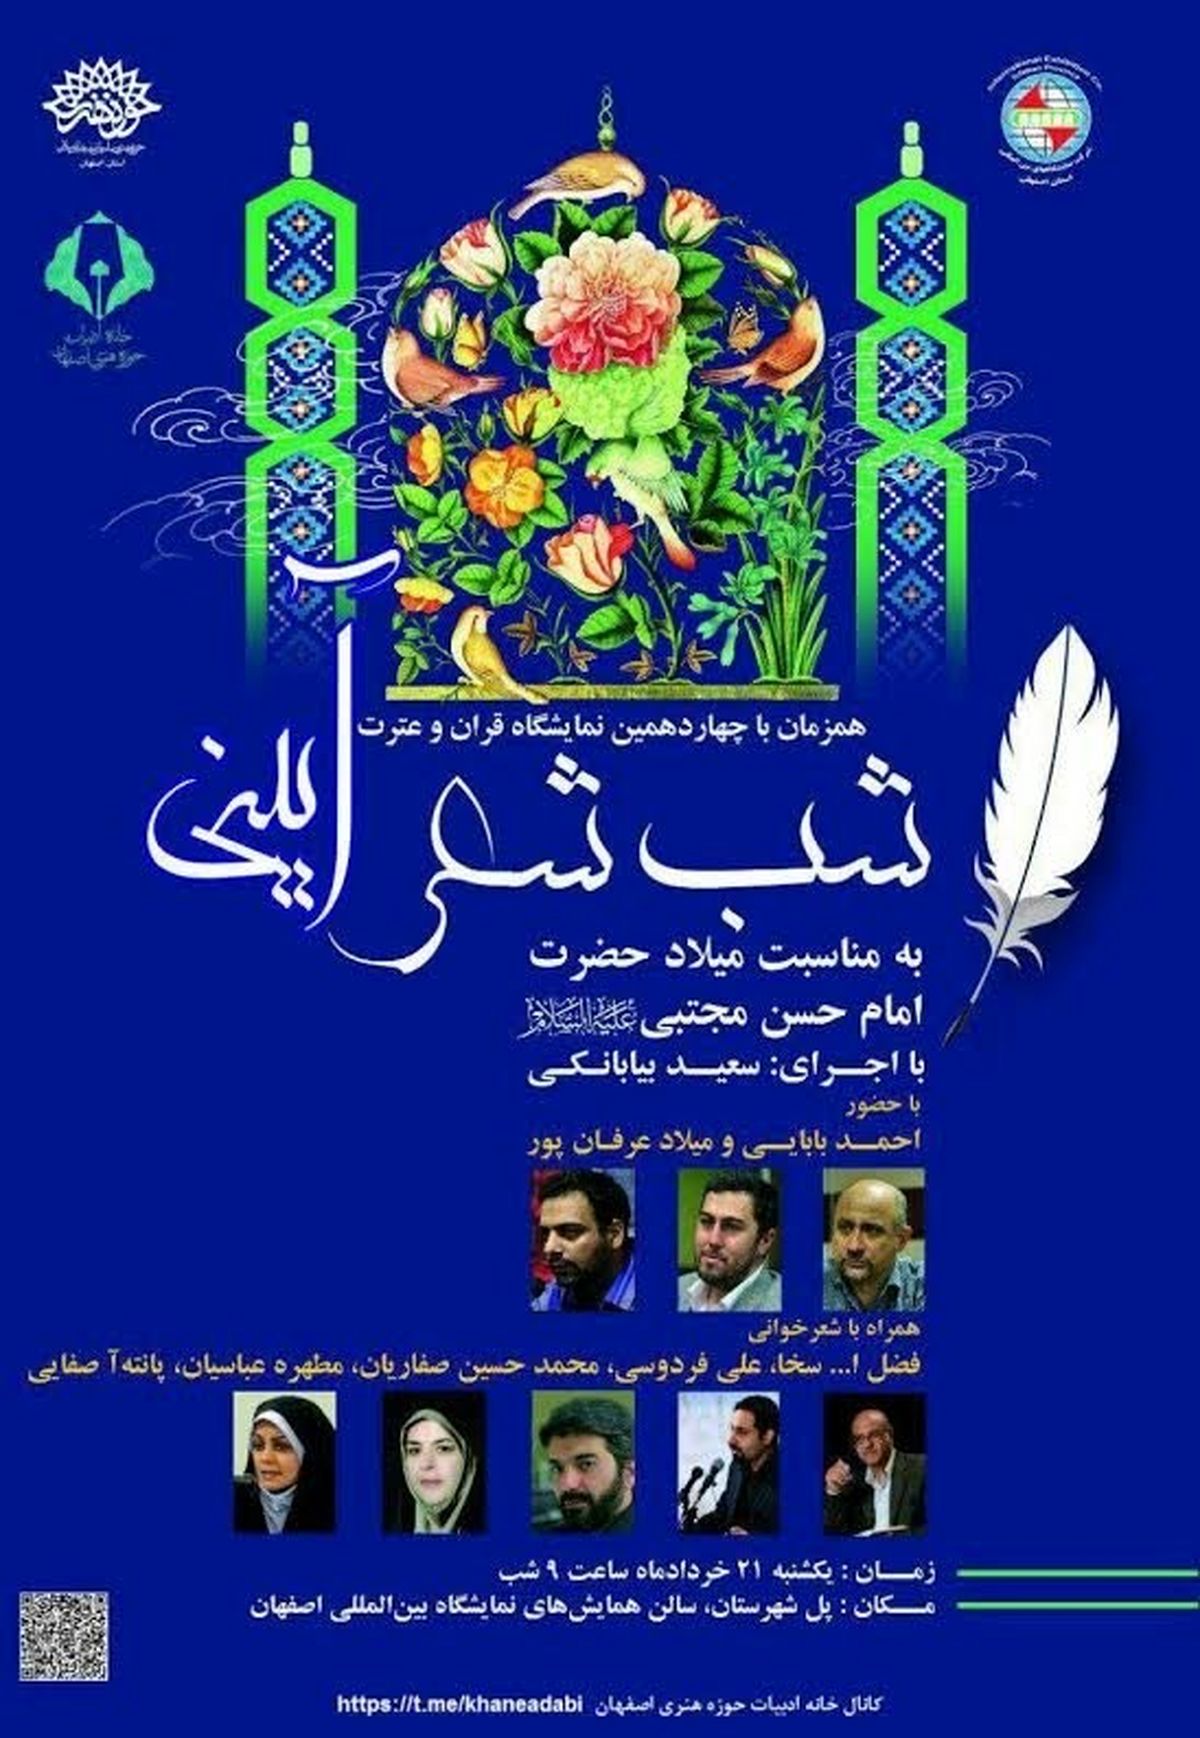 &quot;شب شعر آئینی&quot; با حضور شاعران ملی و اصفهانی در نمایشگاه قرآن و عترت